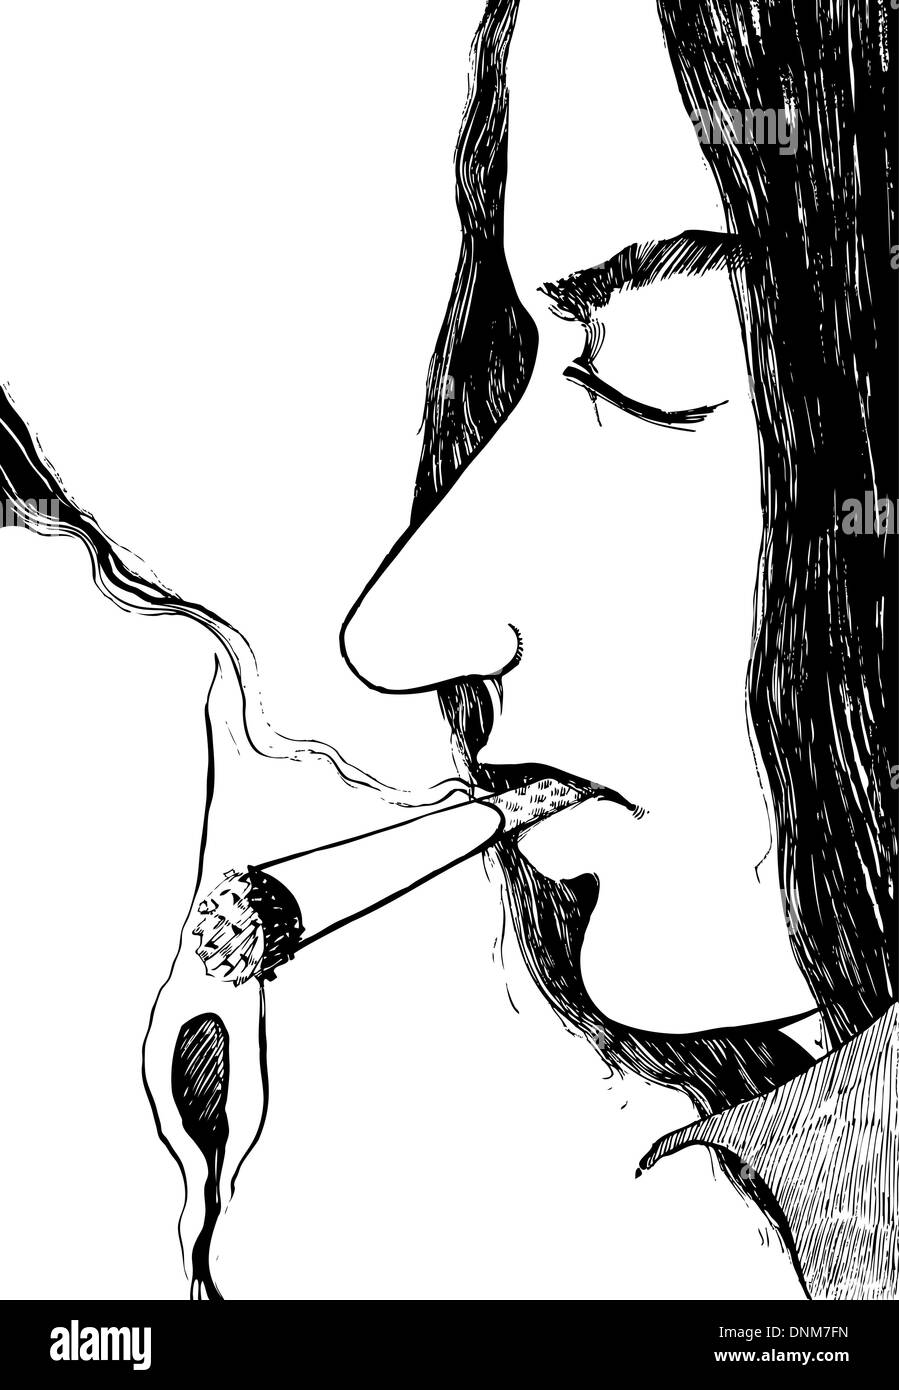 drawing illustration of man burning a cigarette Stock Vector